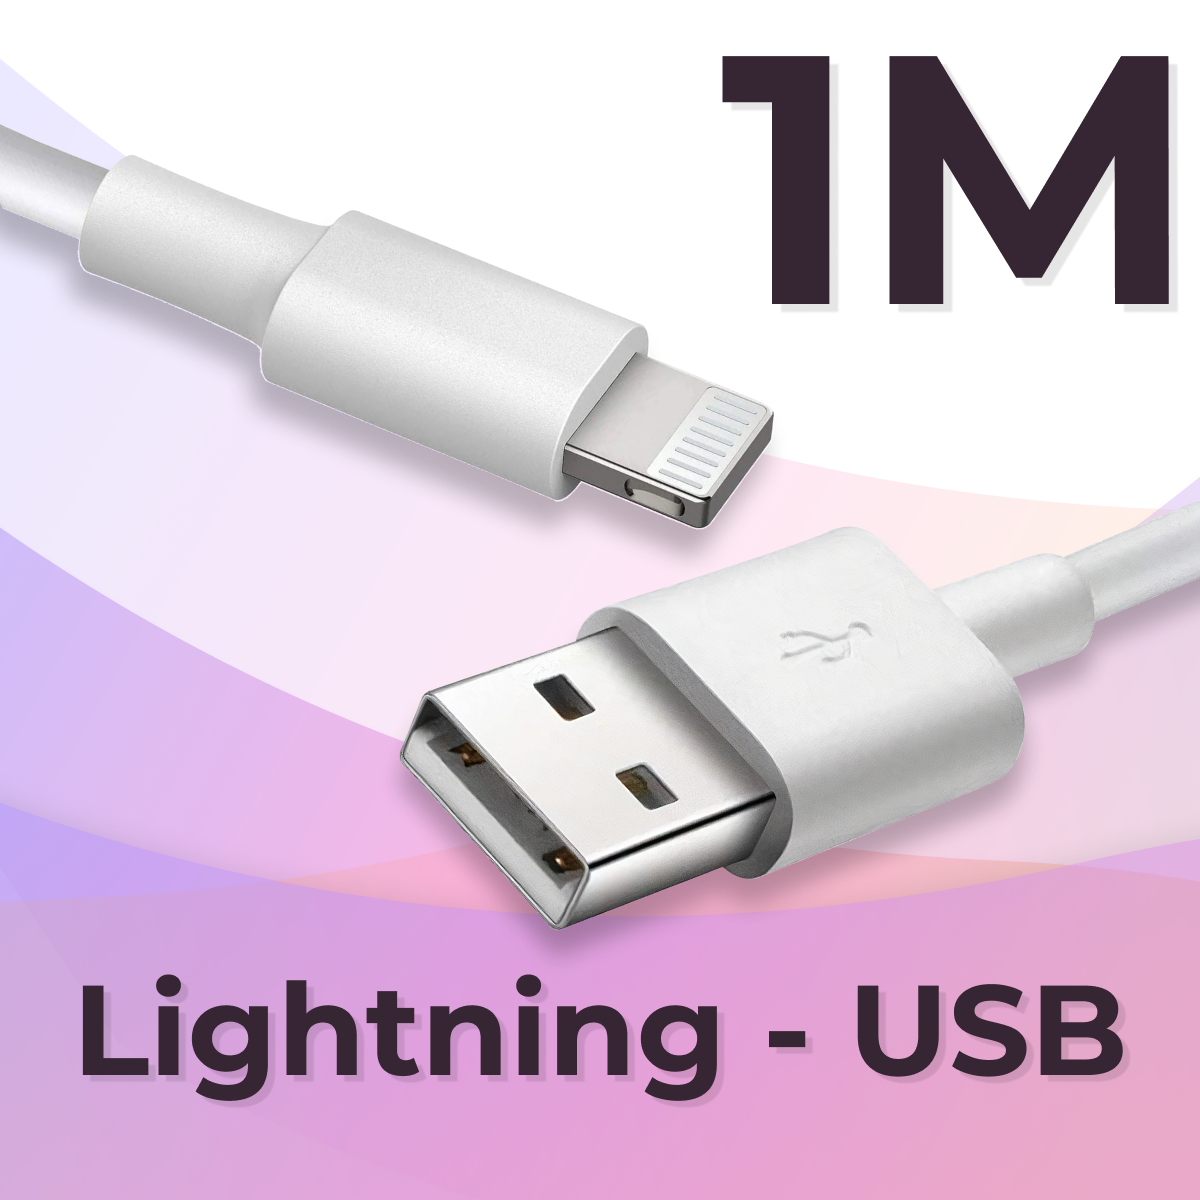 Зарядный кабель (1 метр) USB Lightning на Apple iPhone, iPad, AirPods / Провод ЮСБ Лайтнинг для зарядки телефона Эпл Айфон, Айпад, Аирподс / Белый провод для Айфона